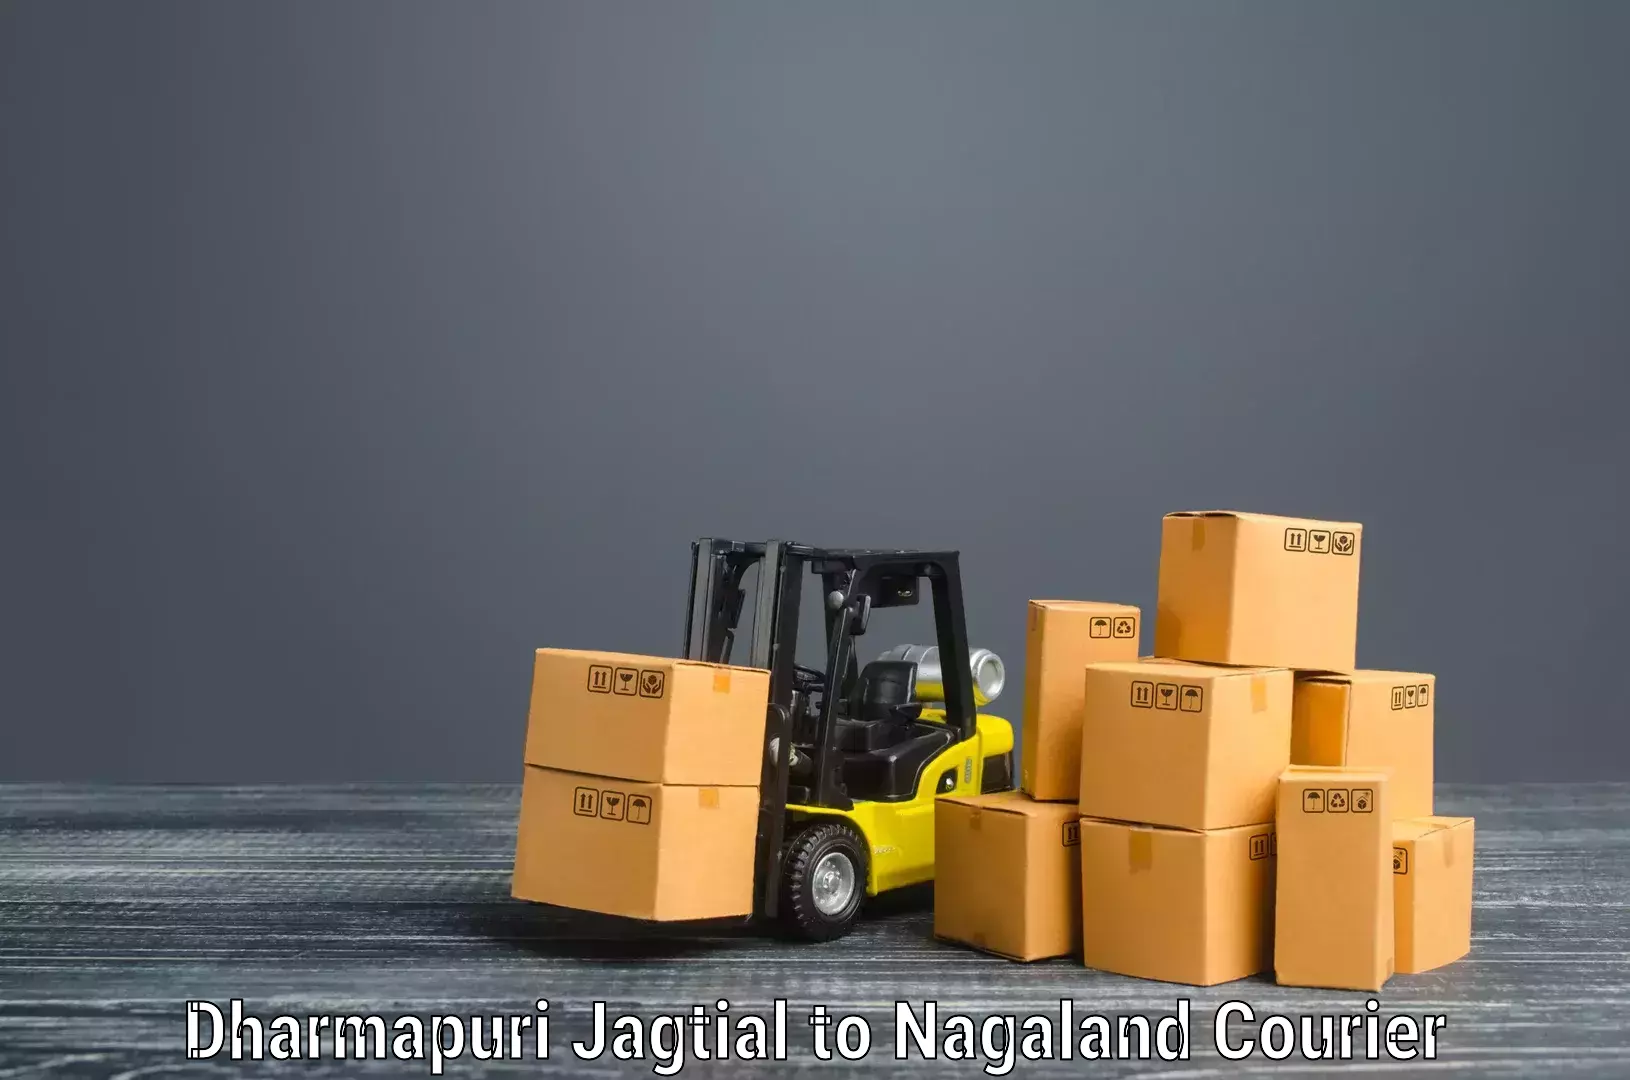 Efficient moving company Dharmapuri Jagtial to Kohima